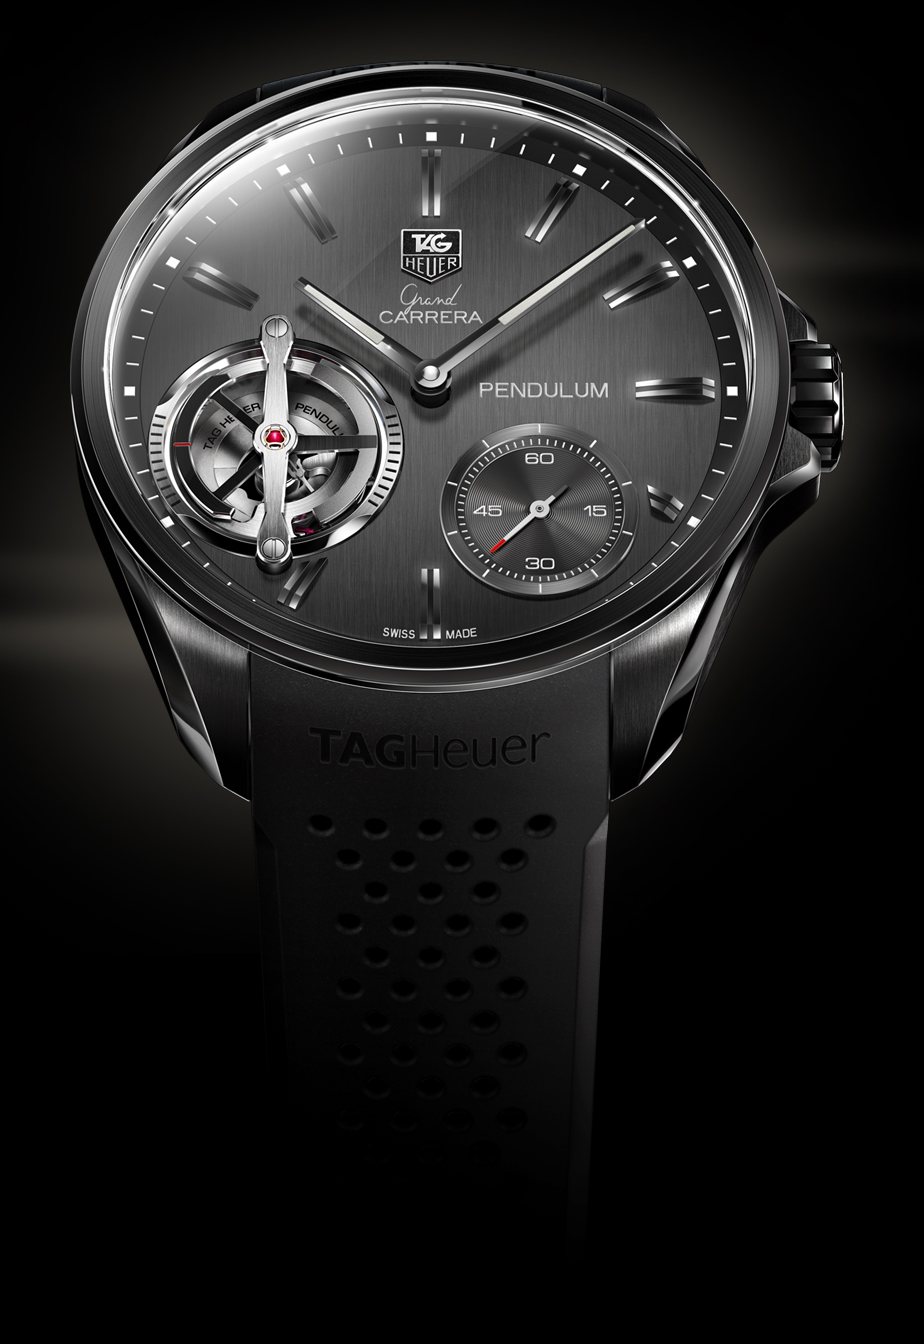 Tag Heuer Grand Carrera Pendulum Concept Watch